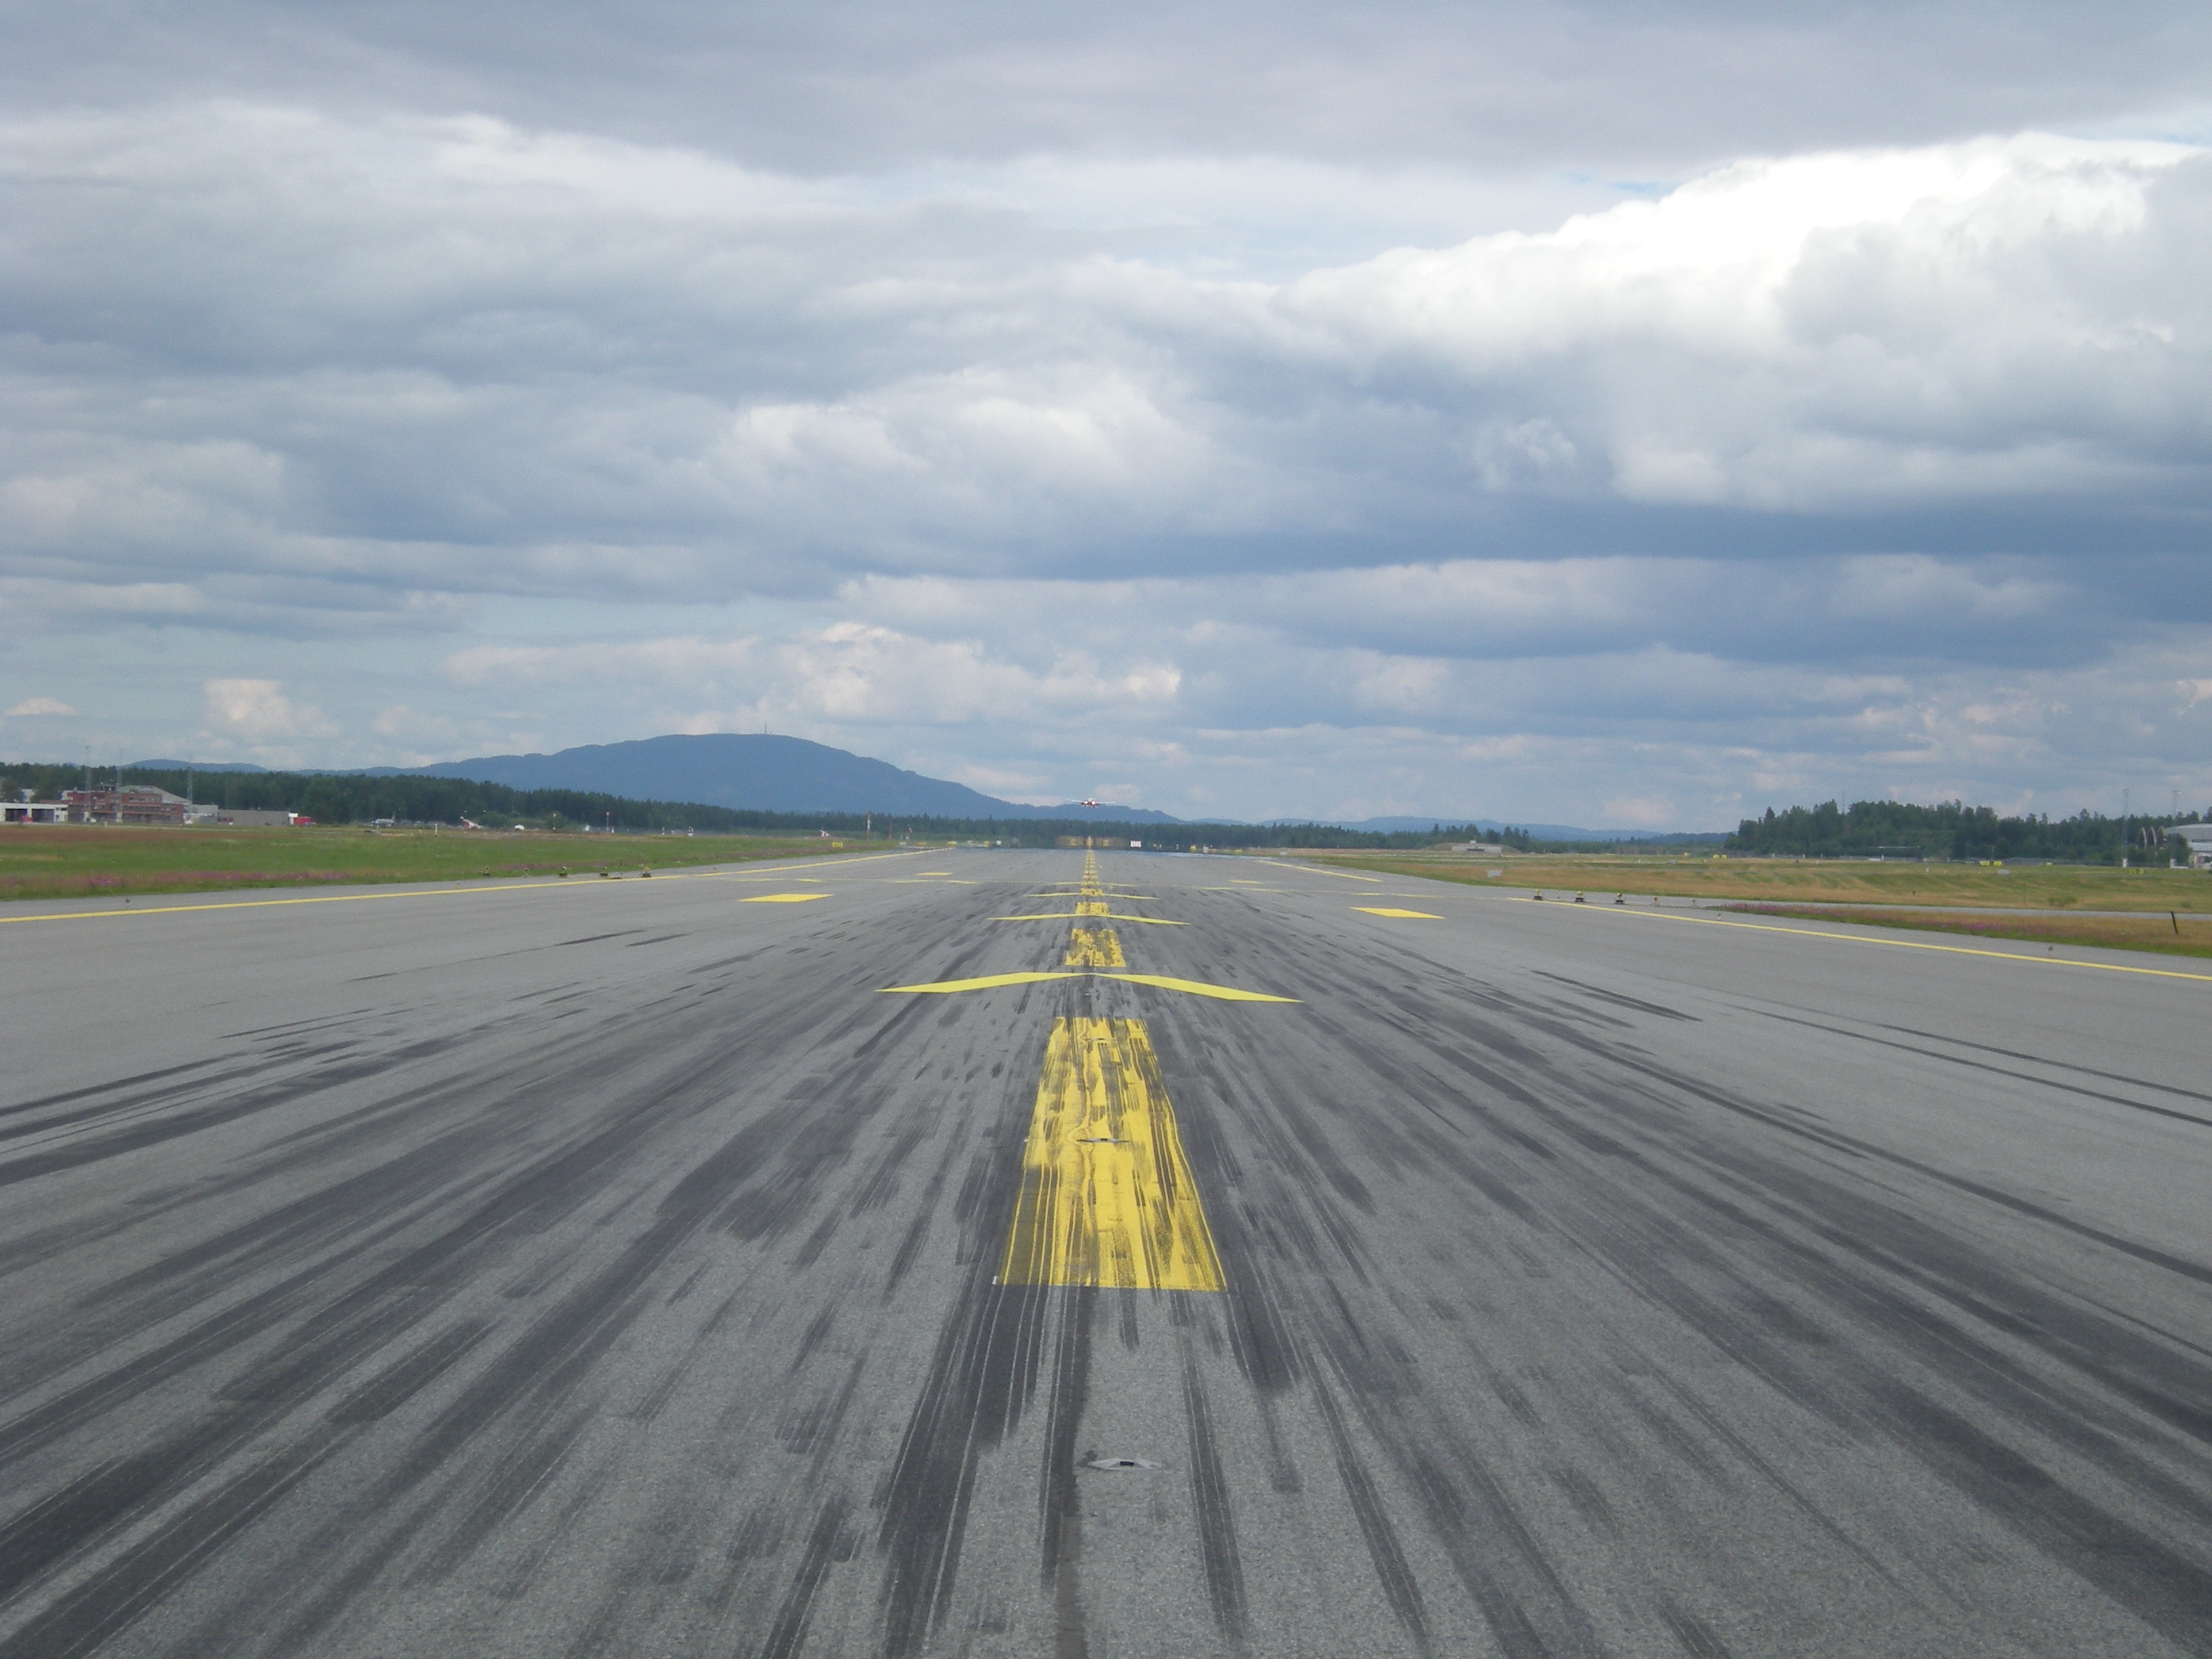 Oslo Airport Gardermoen runway